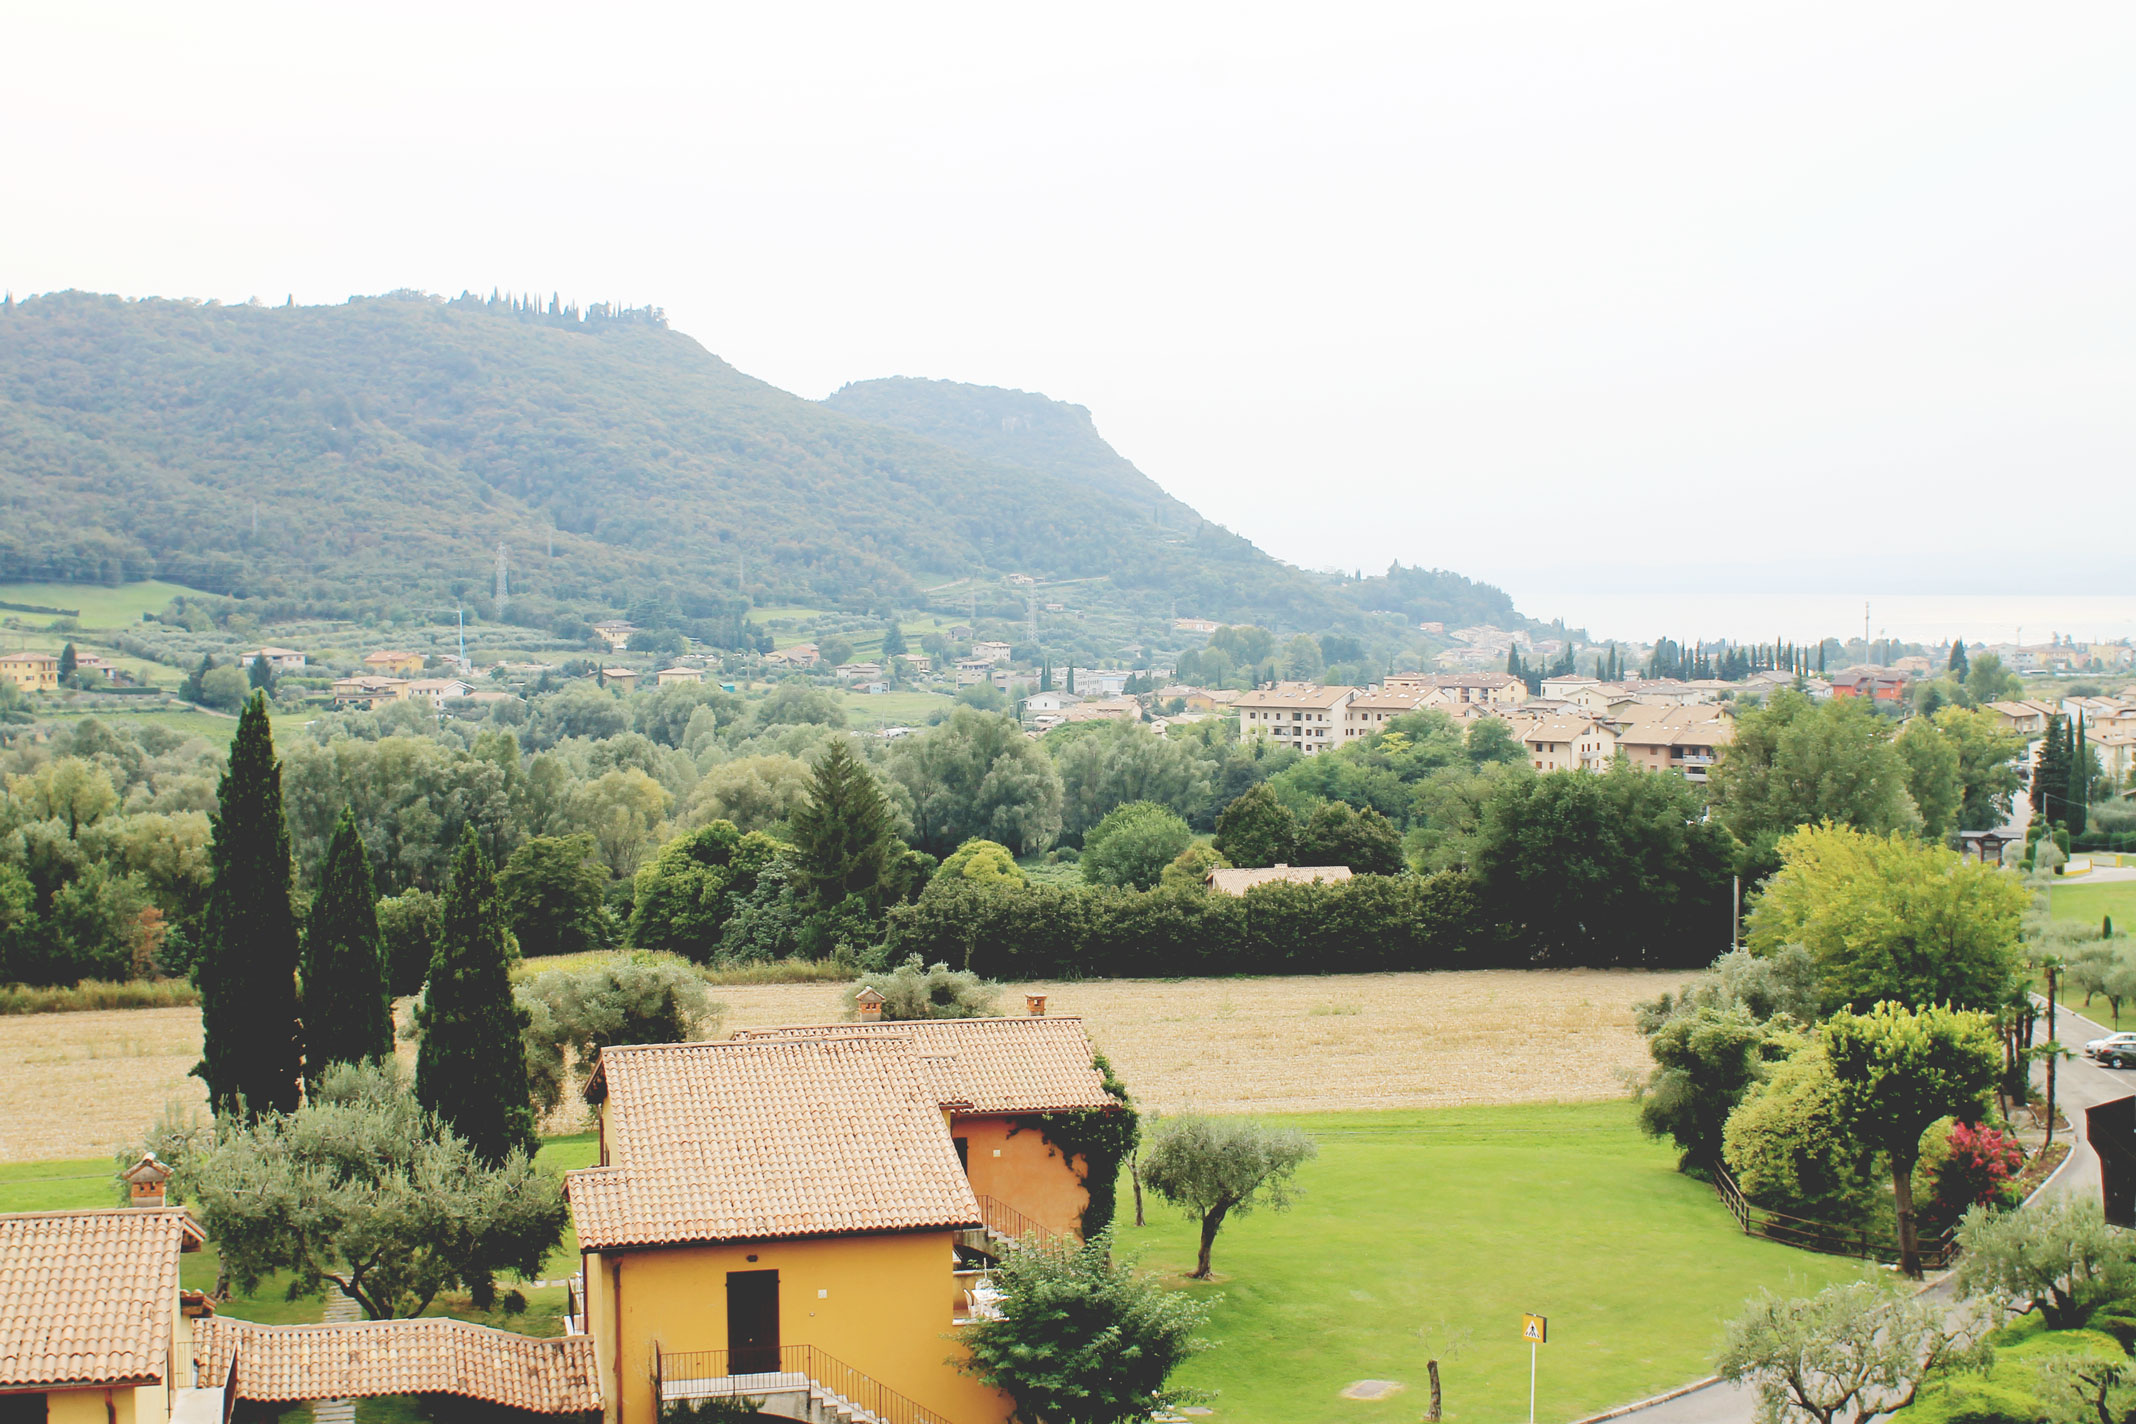 Styleat30 Travel Blog - Poiano Resort Hotel Review - Lake Garda Holiday - Italy Travel Guide 08